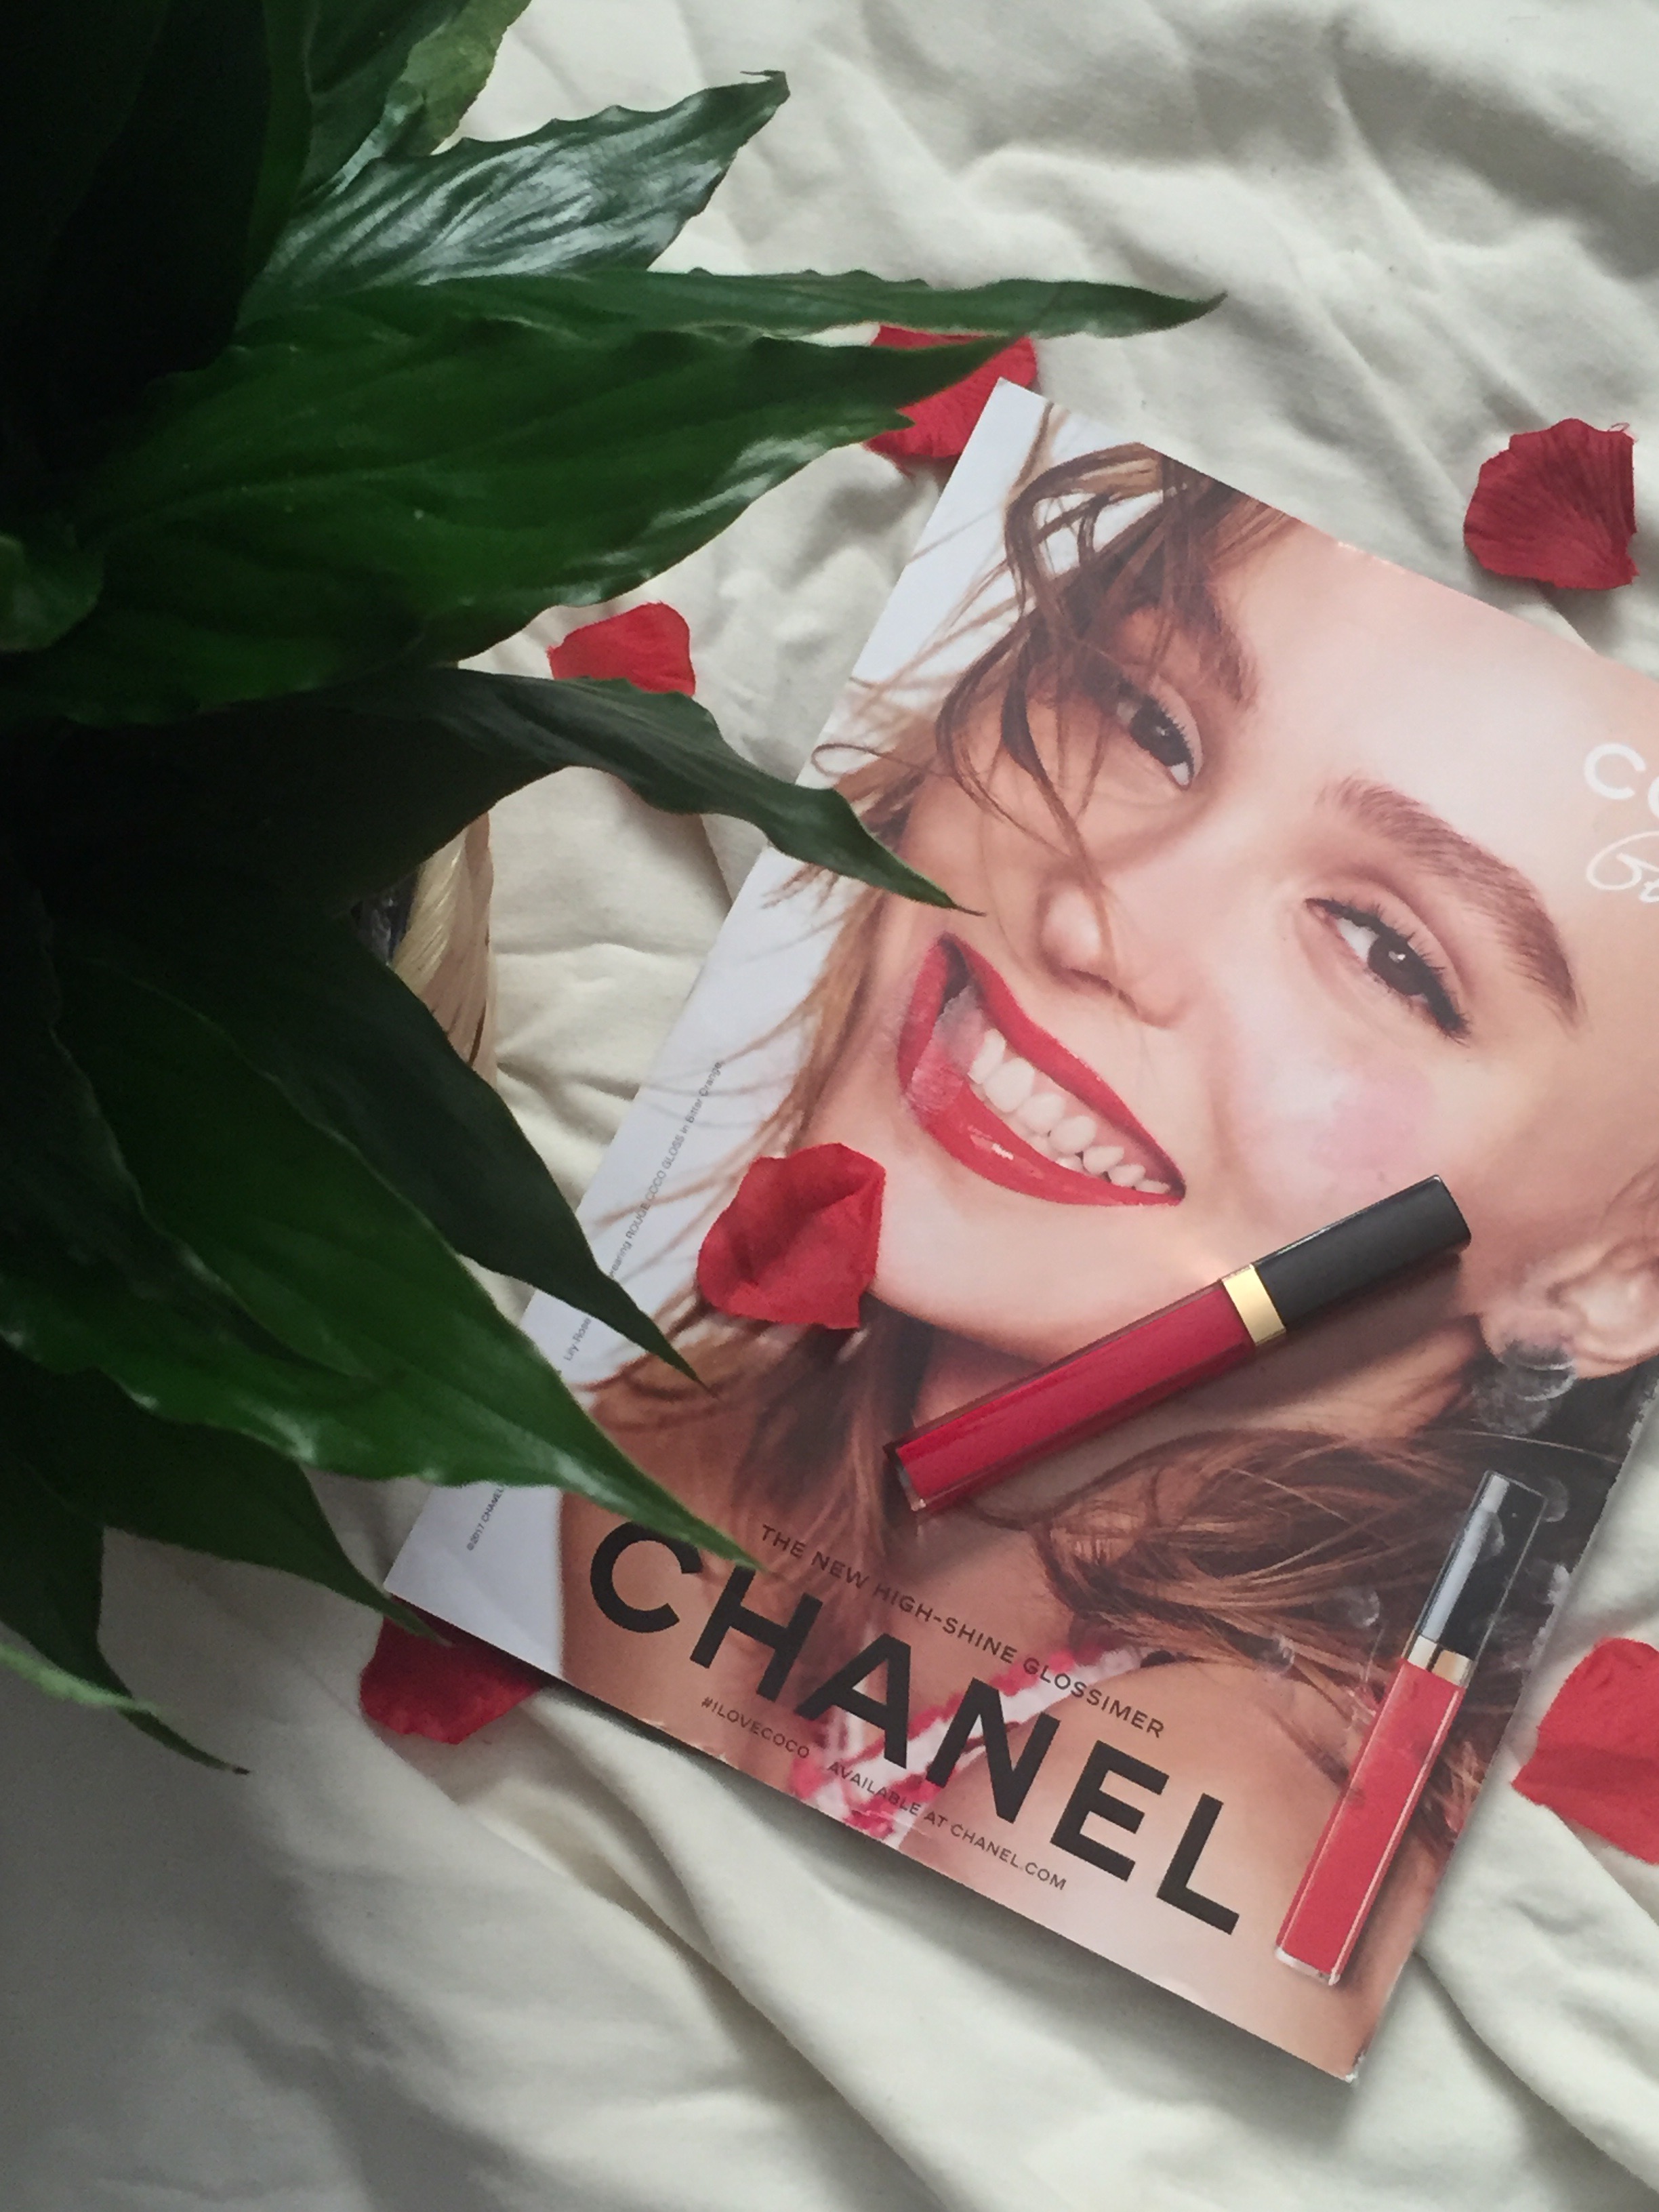 New Chanel Moisturizing Glossimer Shade Comparisons (728 & 714